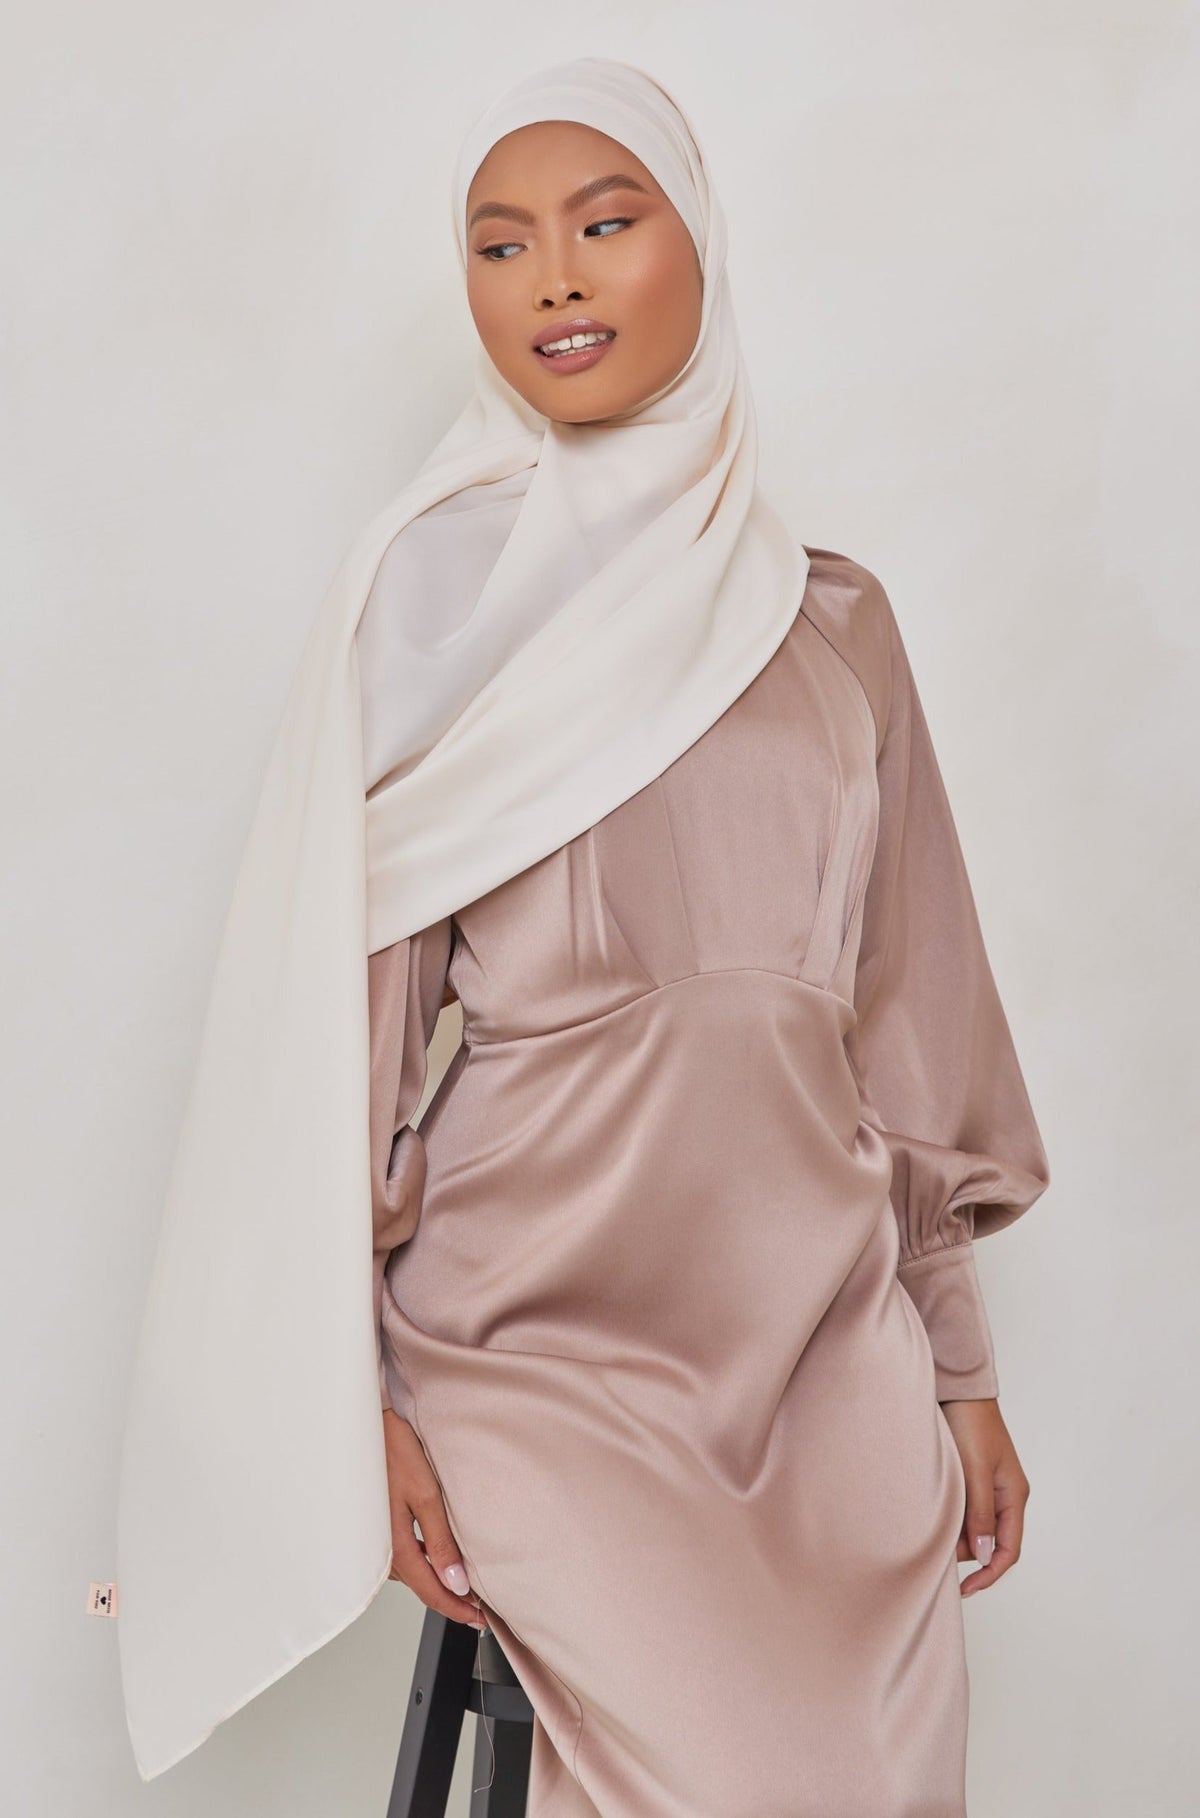 MATTE Satin Hijab - Iridescent Ivory epschoolboard 